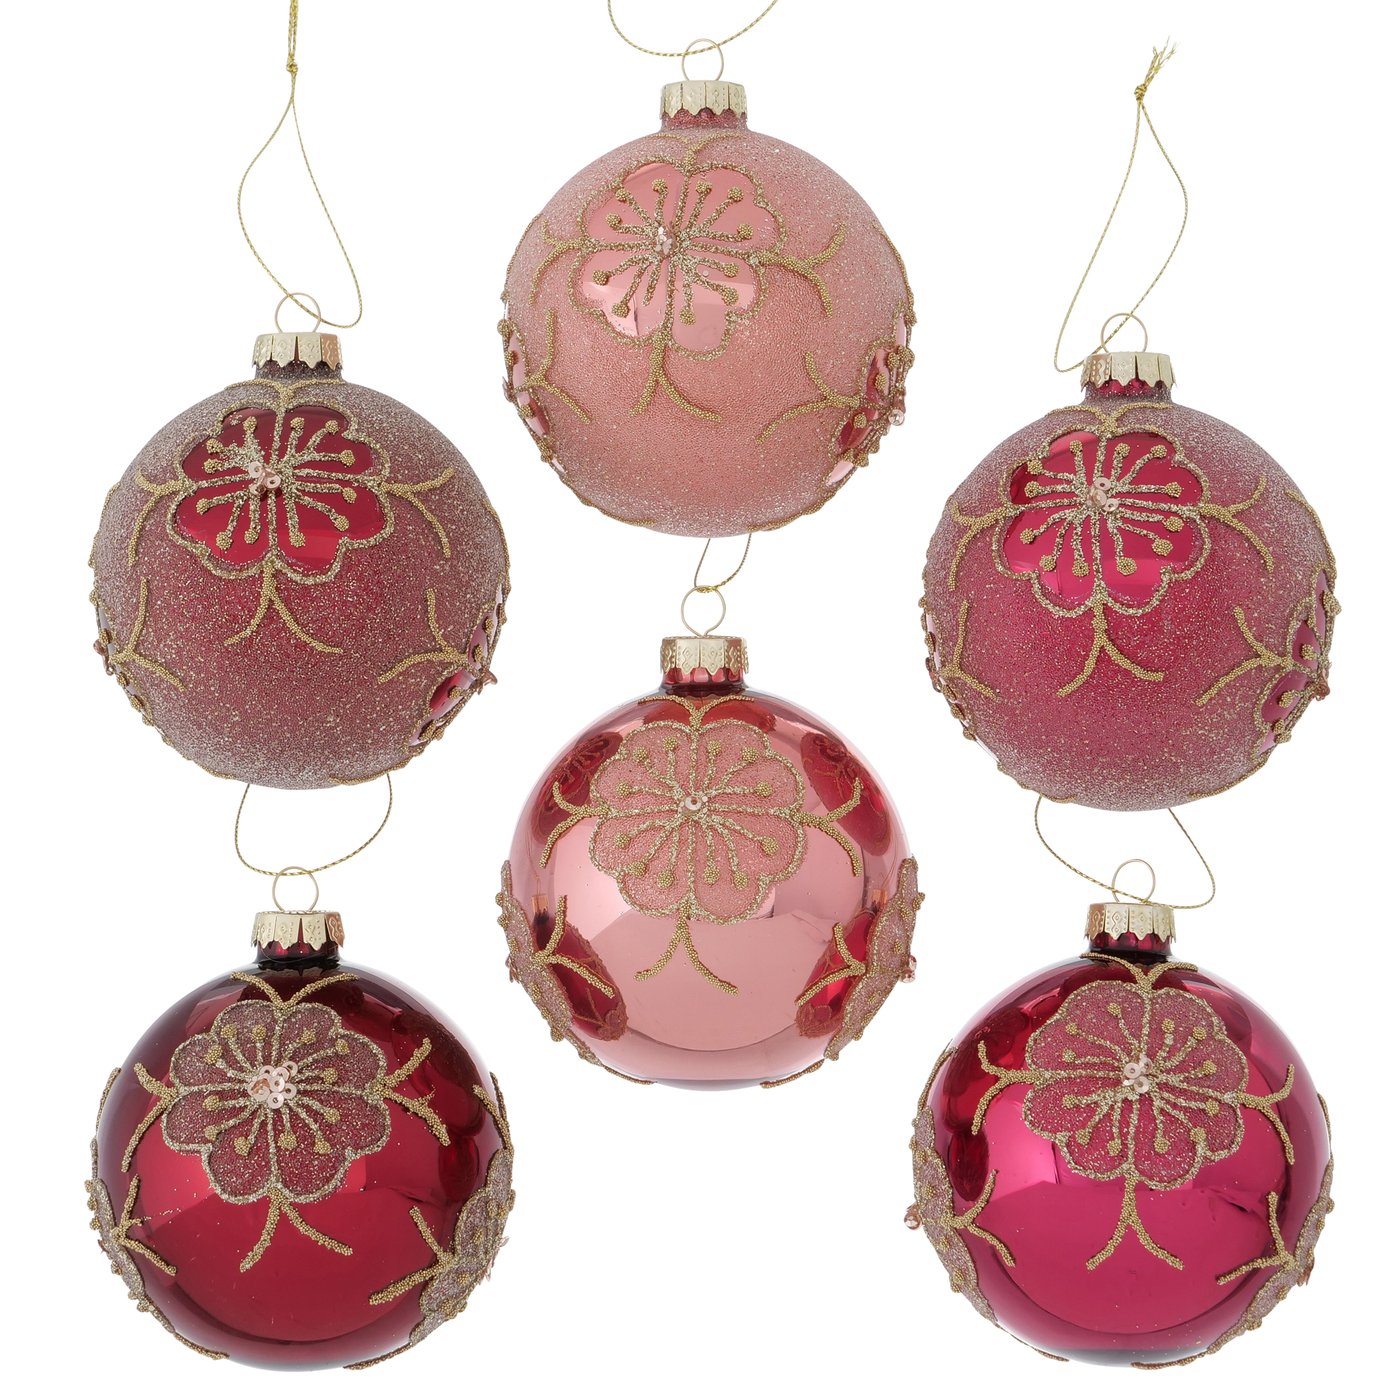 Hochwertige Glas Weihnachtskugeln rot rosa pink gold 12er Set - D 8cm Handarbeit, 2023463, 4066076050130, Boltze xmas, Christbaumkugel Weihnachtsbaumkugel, 